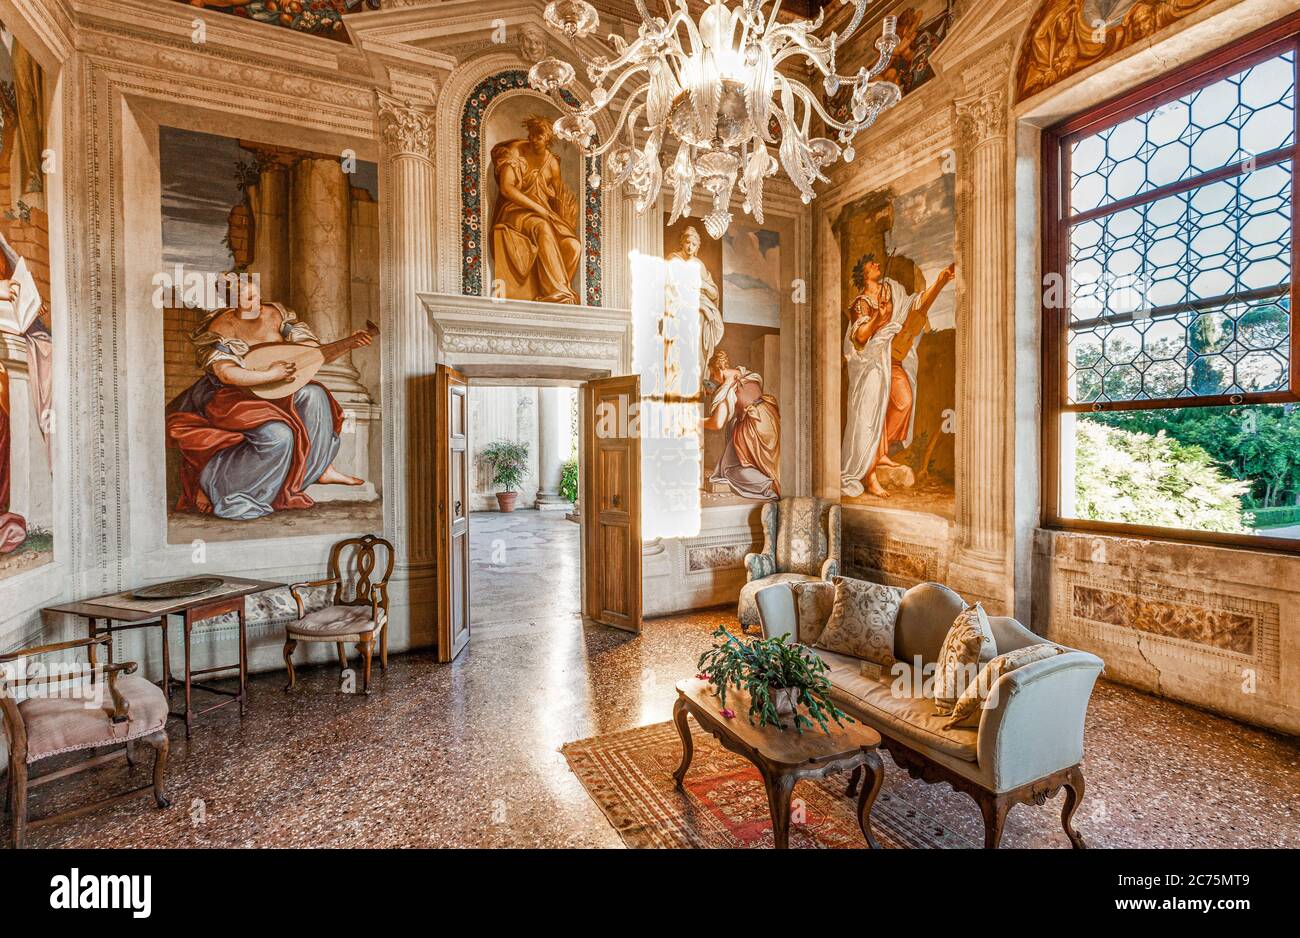 Italy Veneto - Fanzolo - Villa Emo - Andrea Palladio Architect - The Hall of Arts - Frescoes by Battista Zelotti Stock Photo